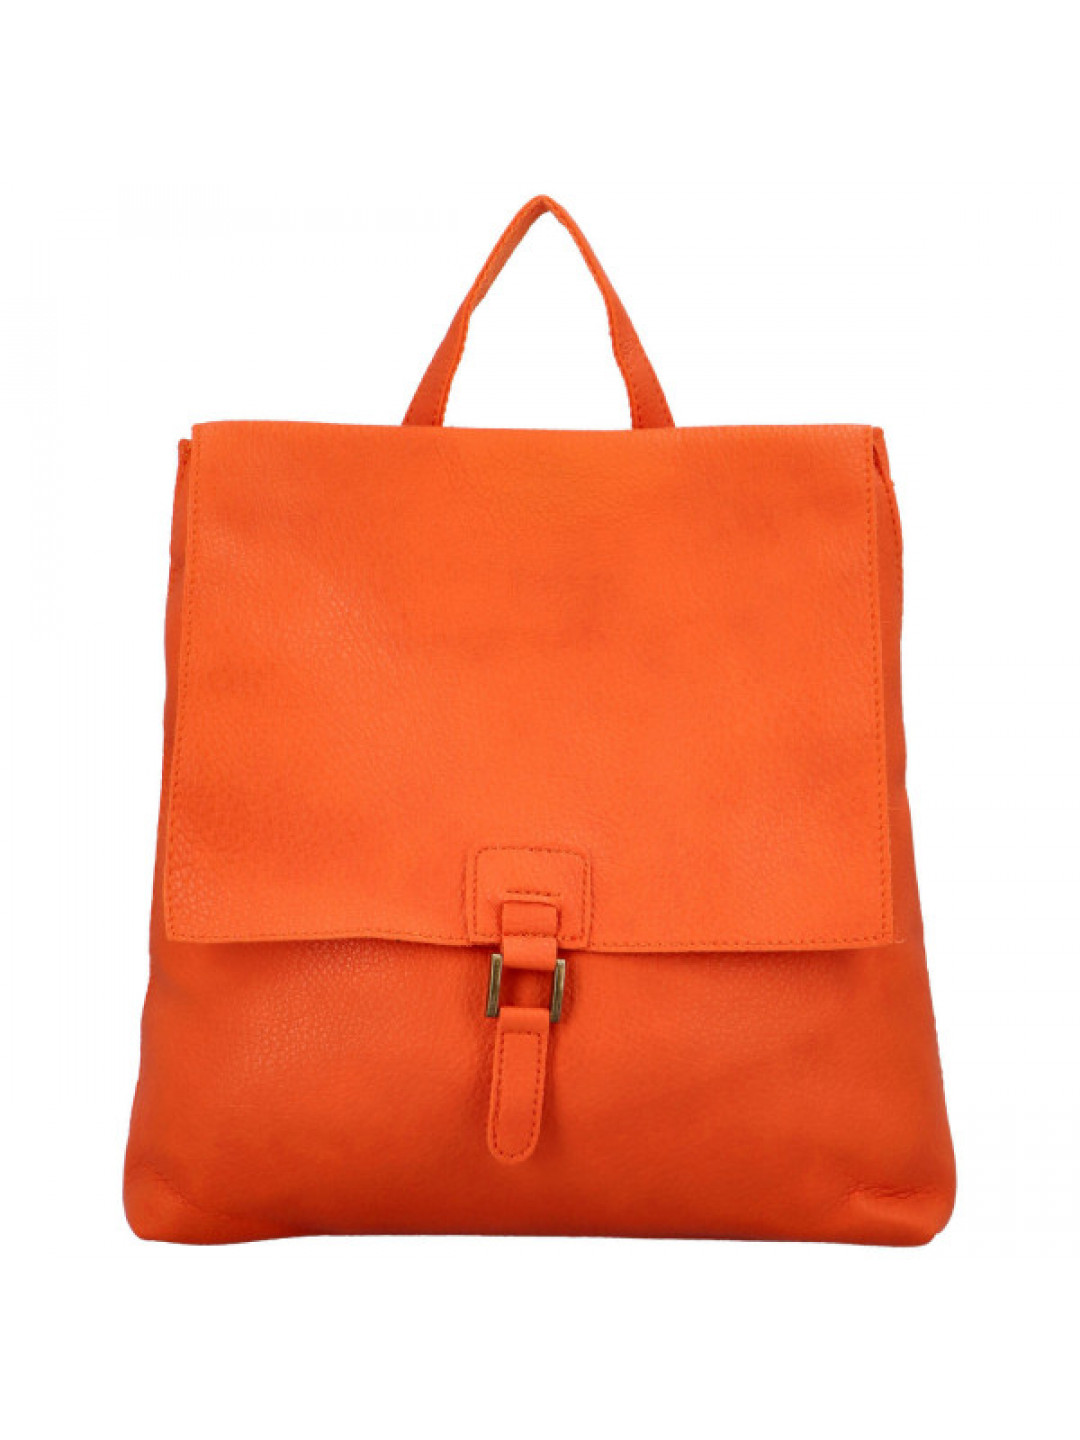 Stylový dámský koženkový kabelko-batoh Octavius oranžový